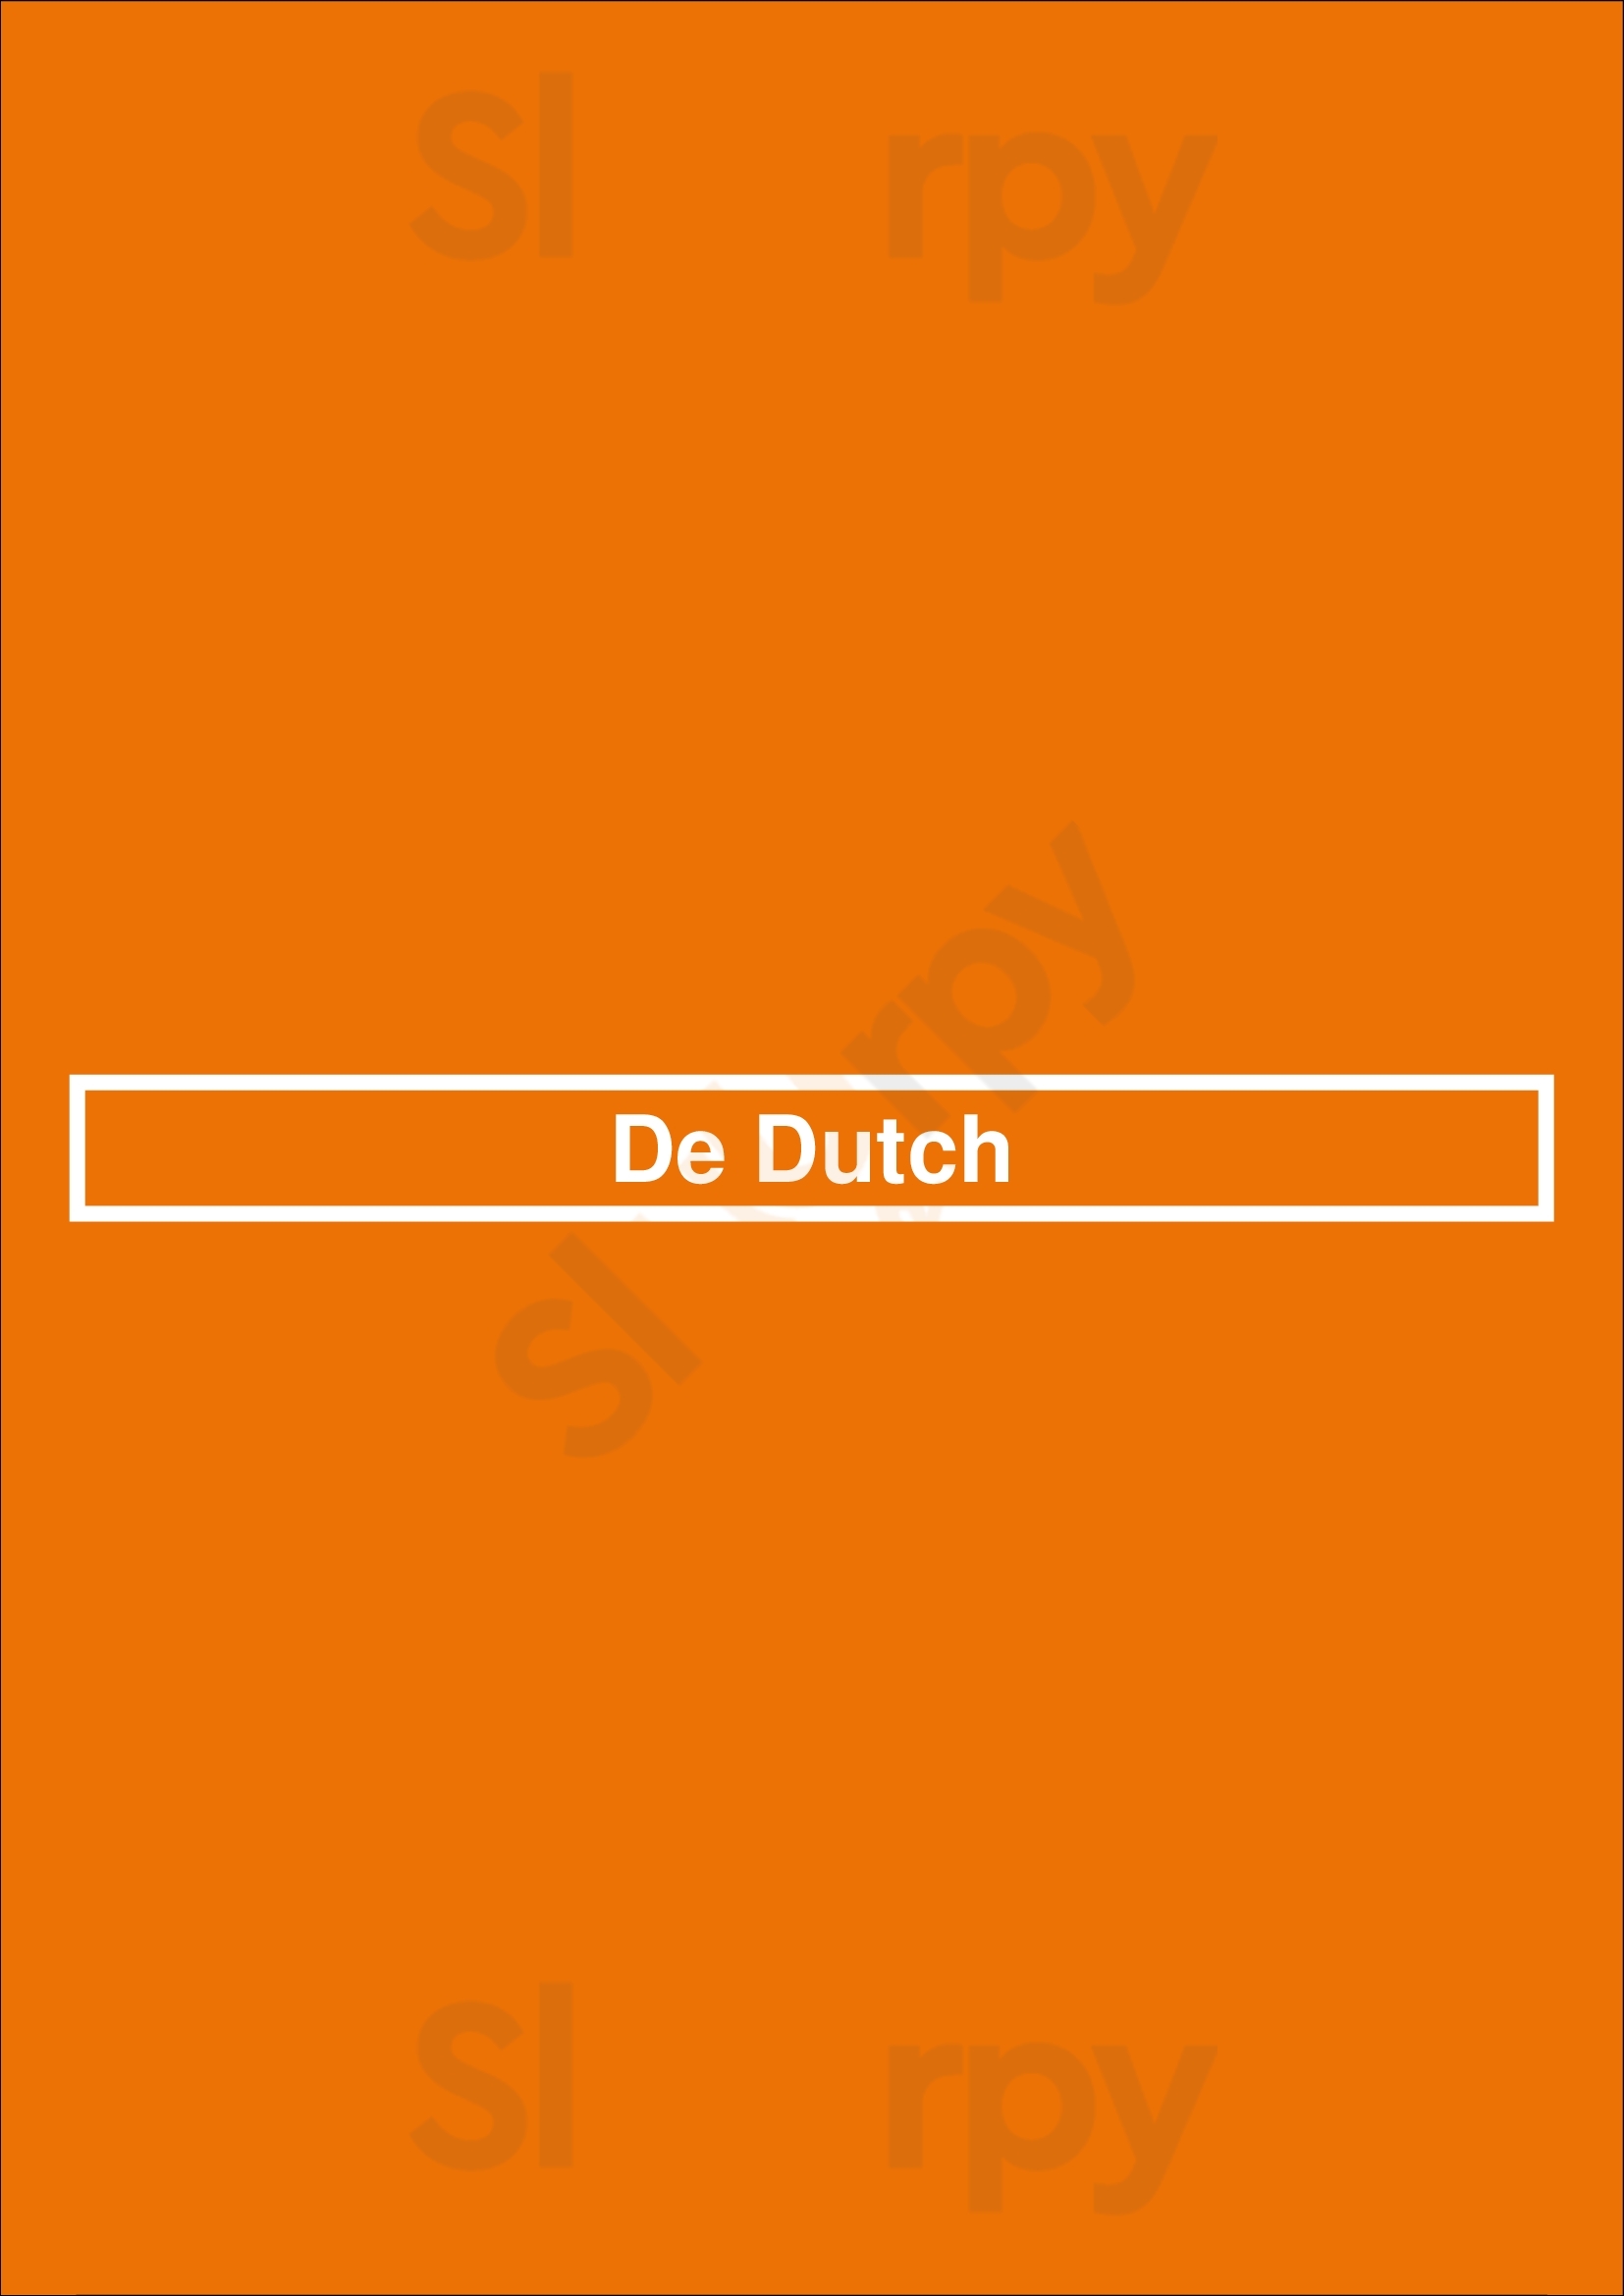 De Dutch Edmonton Menu - 1